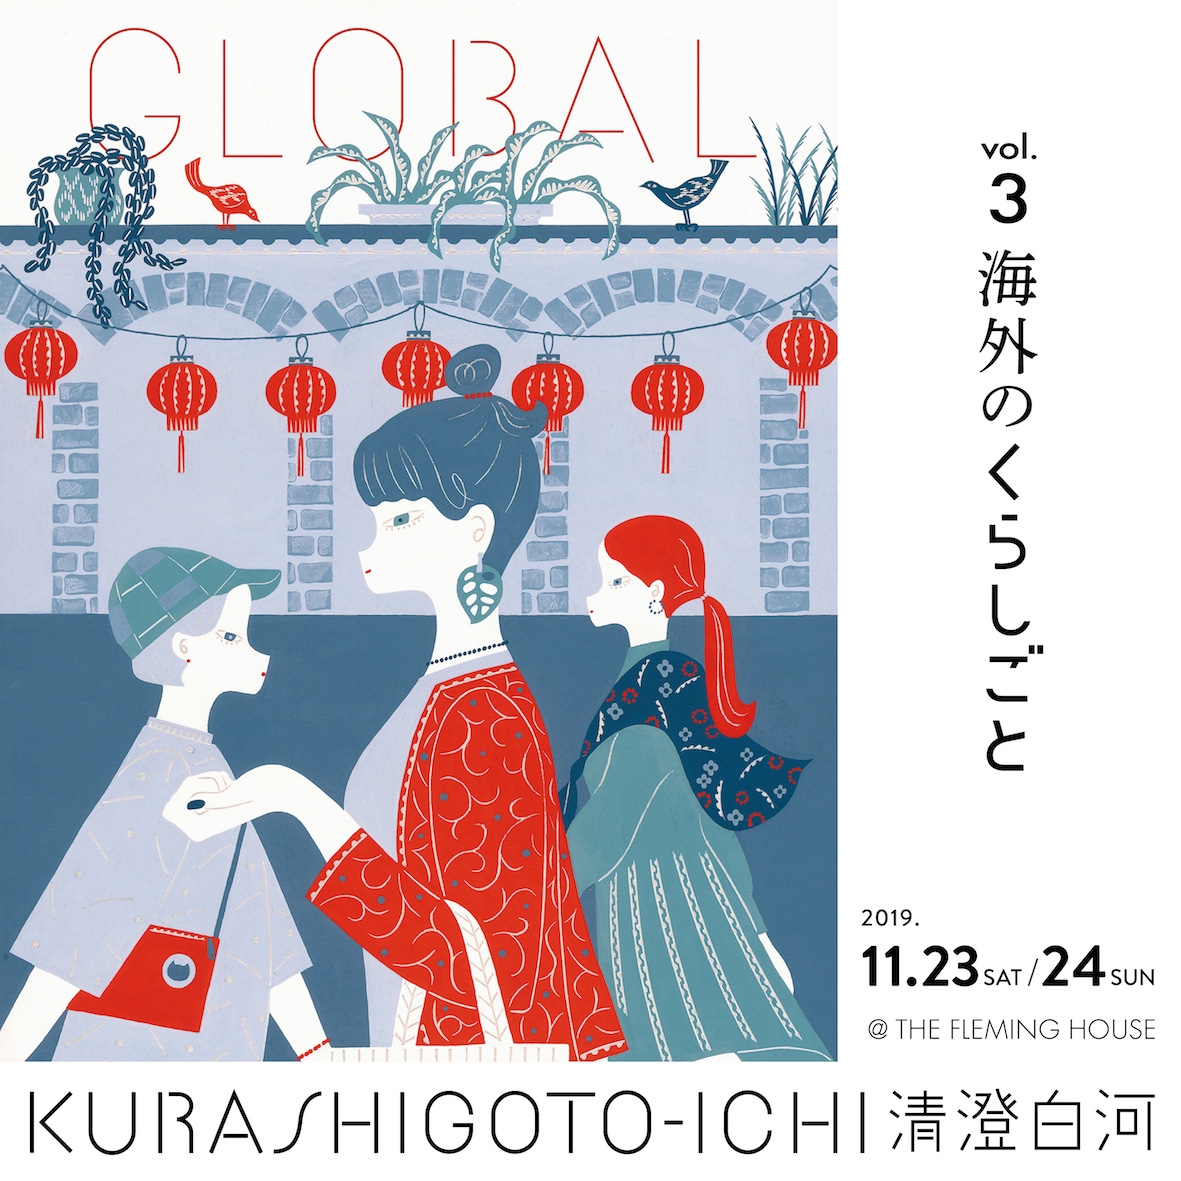 Exhibition くらしごと市 In 清澄白河 Vol 3 Global Azami Eimi Illustrations